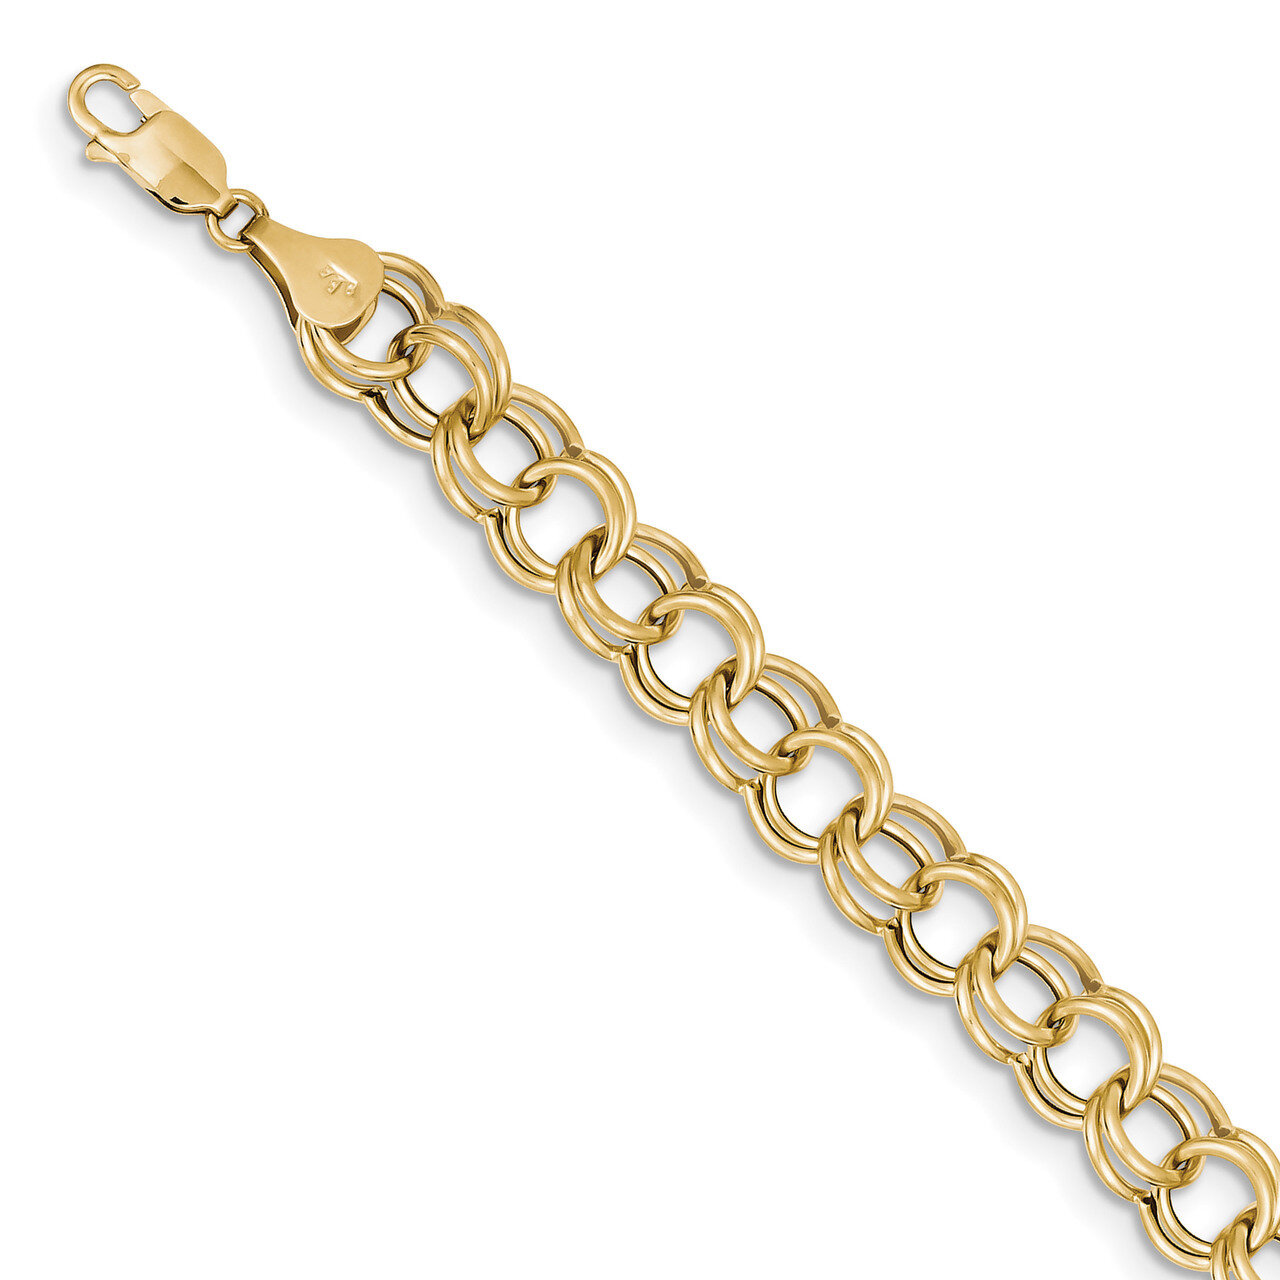 7 Inch Hollow Double Link Charm Bracelet 10k Gold 10DO520-7